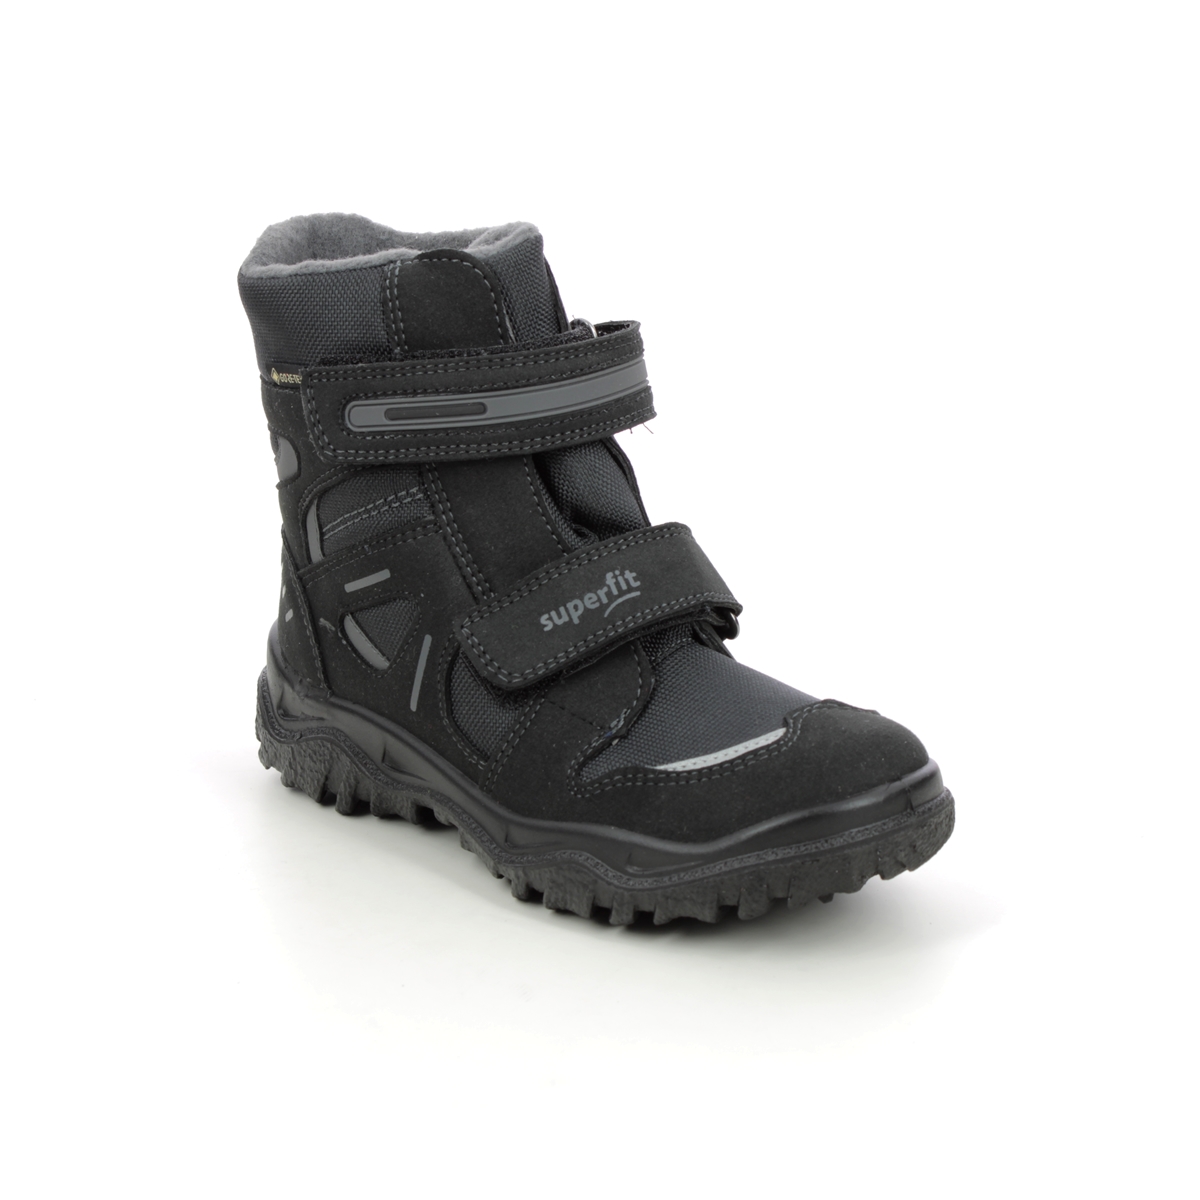 Superfit Husky Jnr Gore Black Kids Boys Boots 0809080-0600 In Size 38 In Plain Black For kids